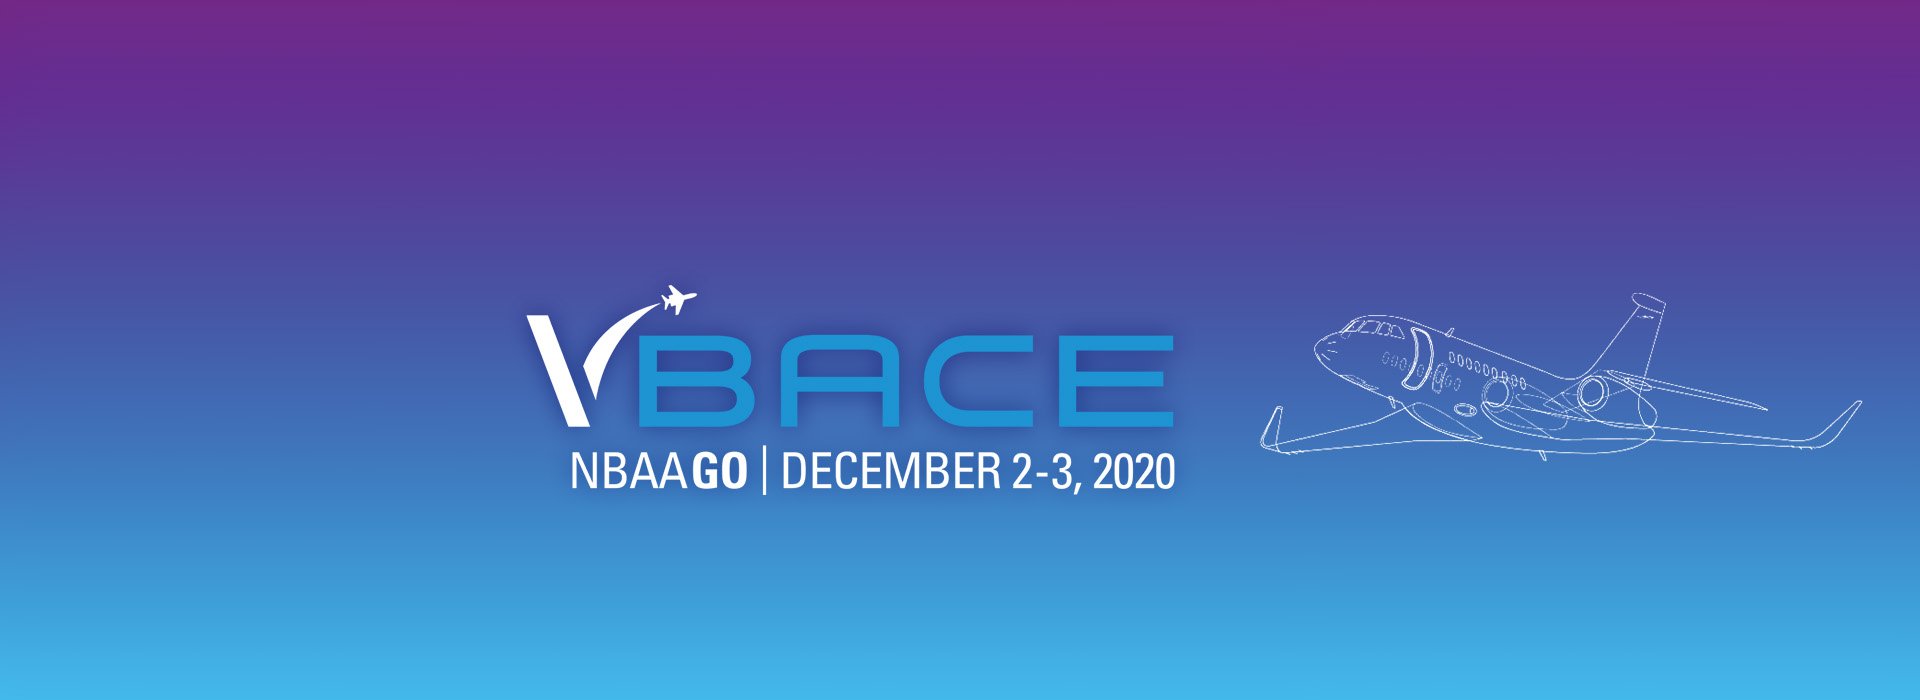 Euro Jet to Exhibit at VBACE Virtual Trade Show